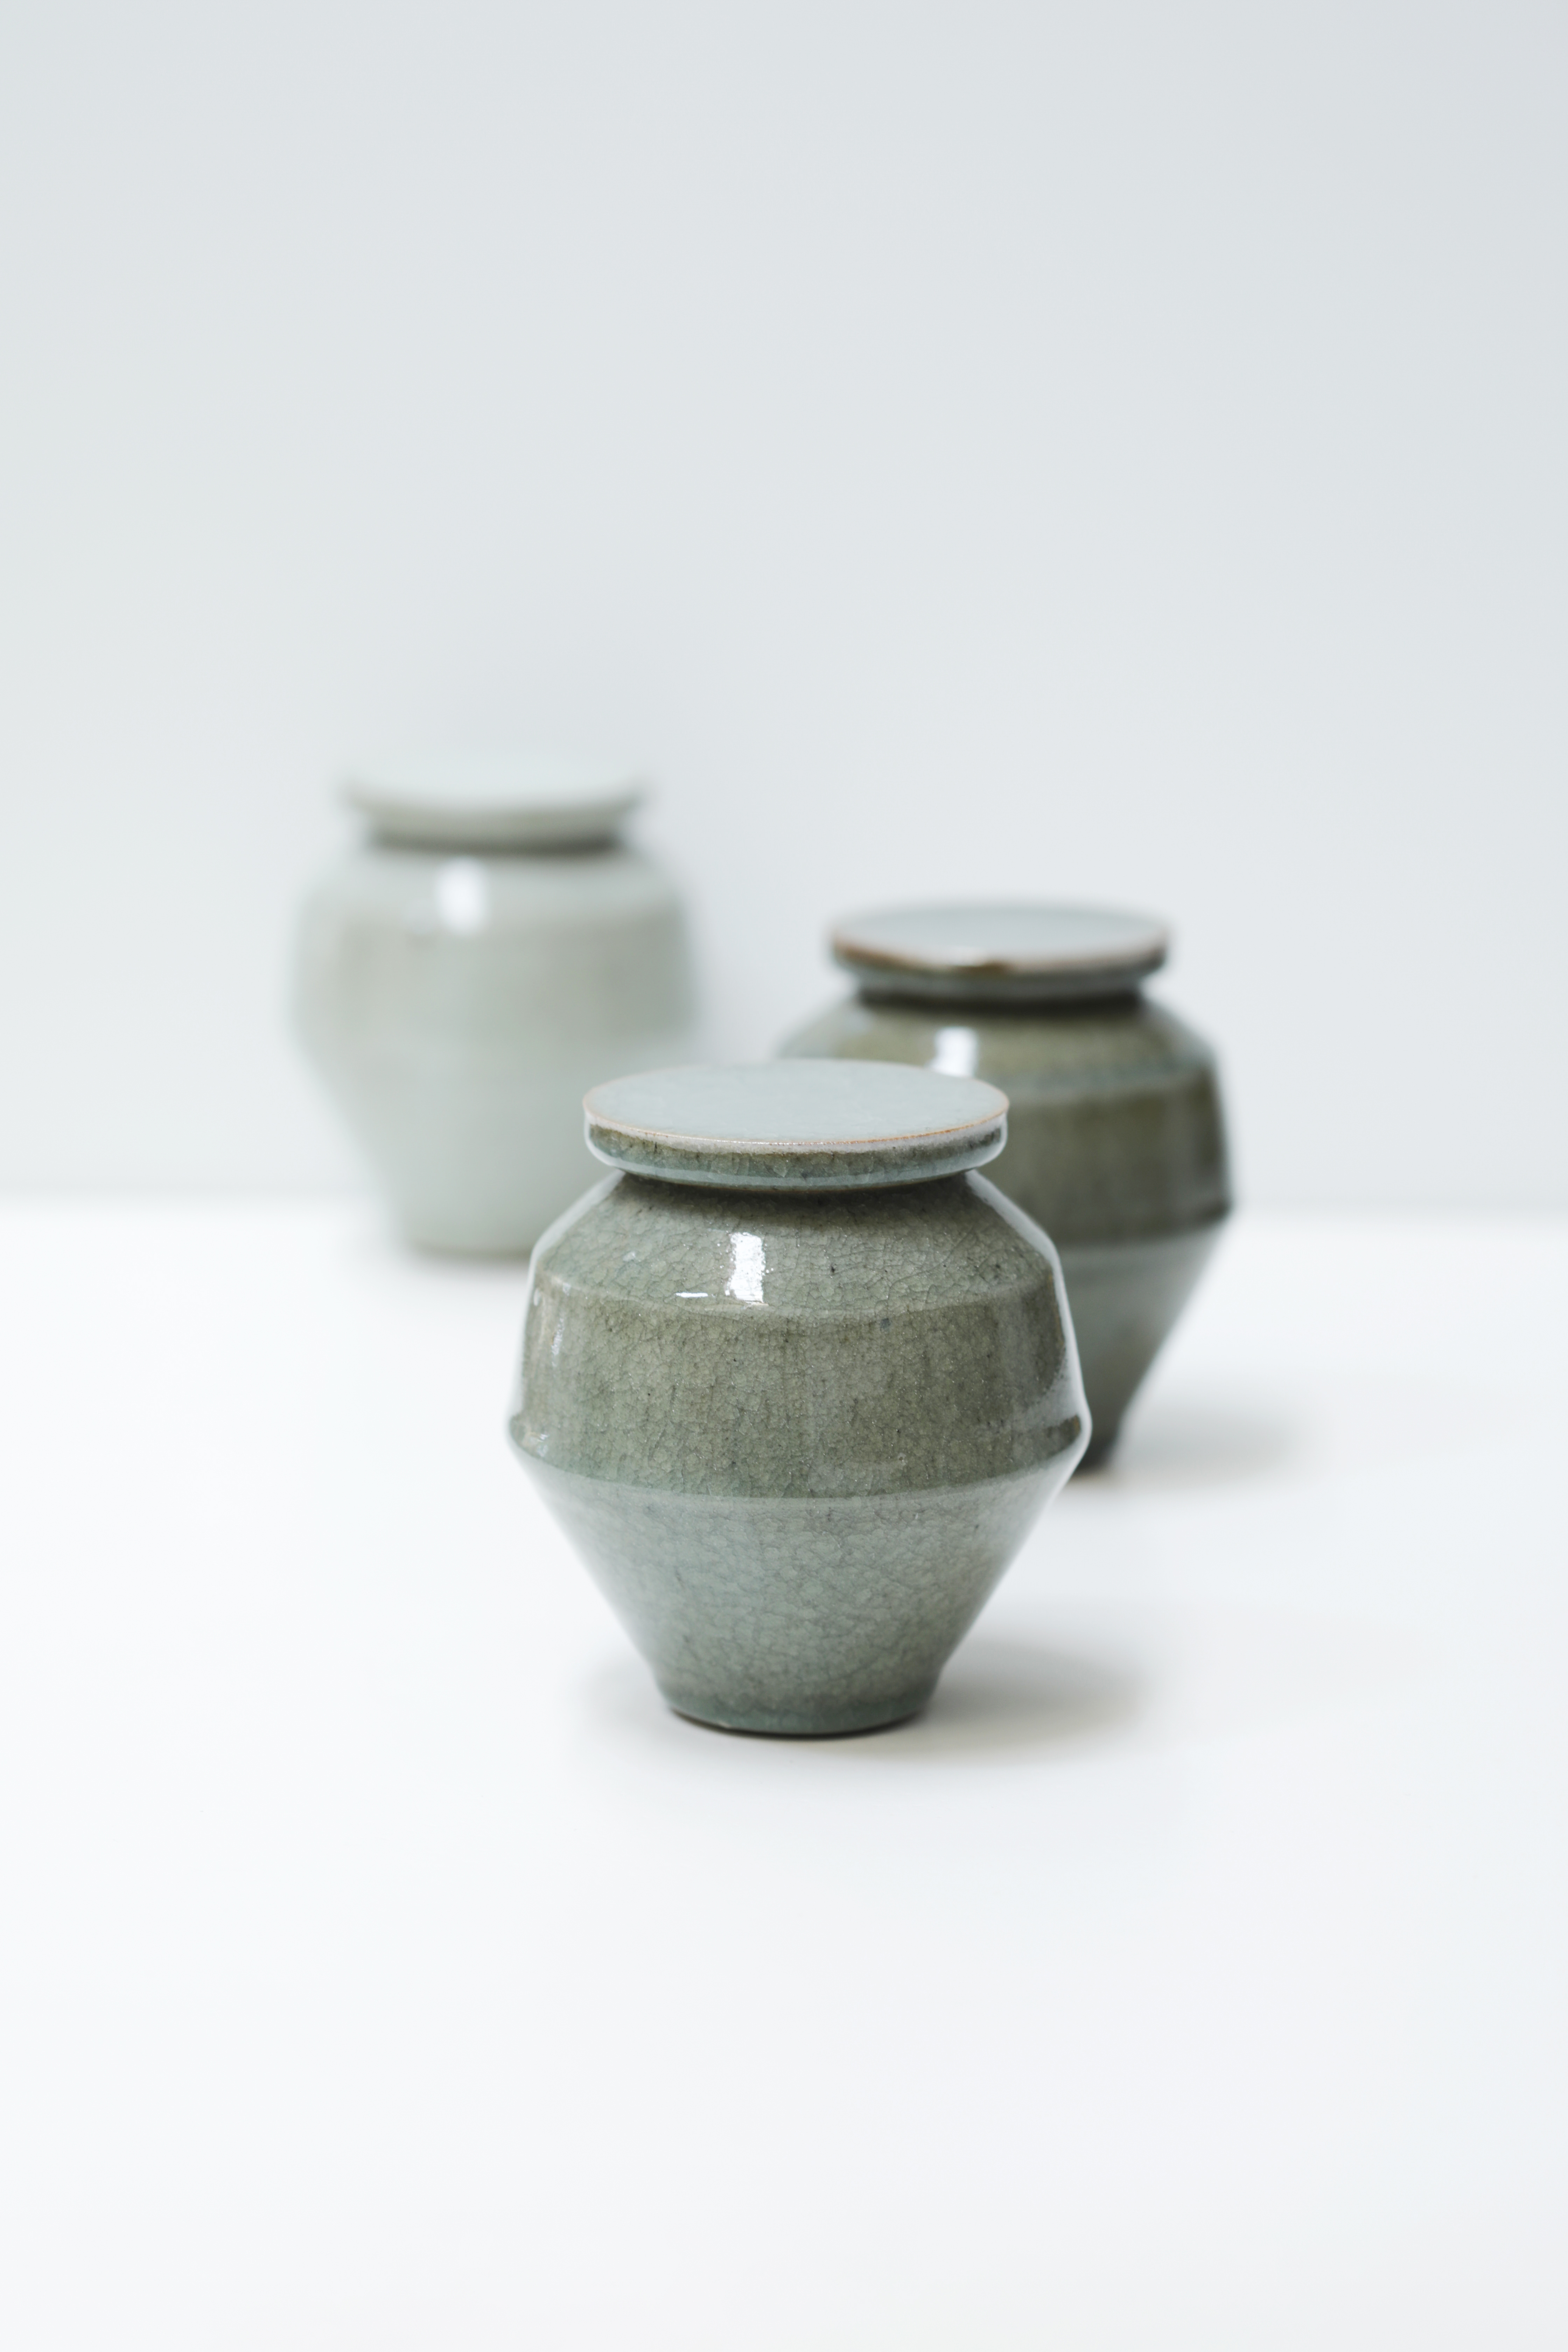 Three angular ceramic jars